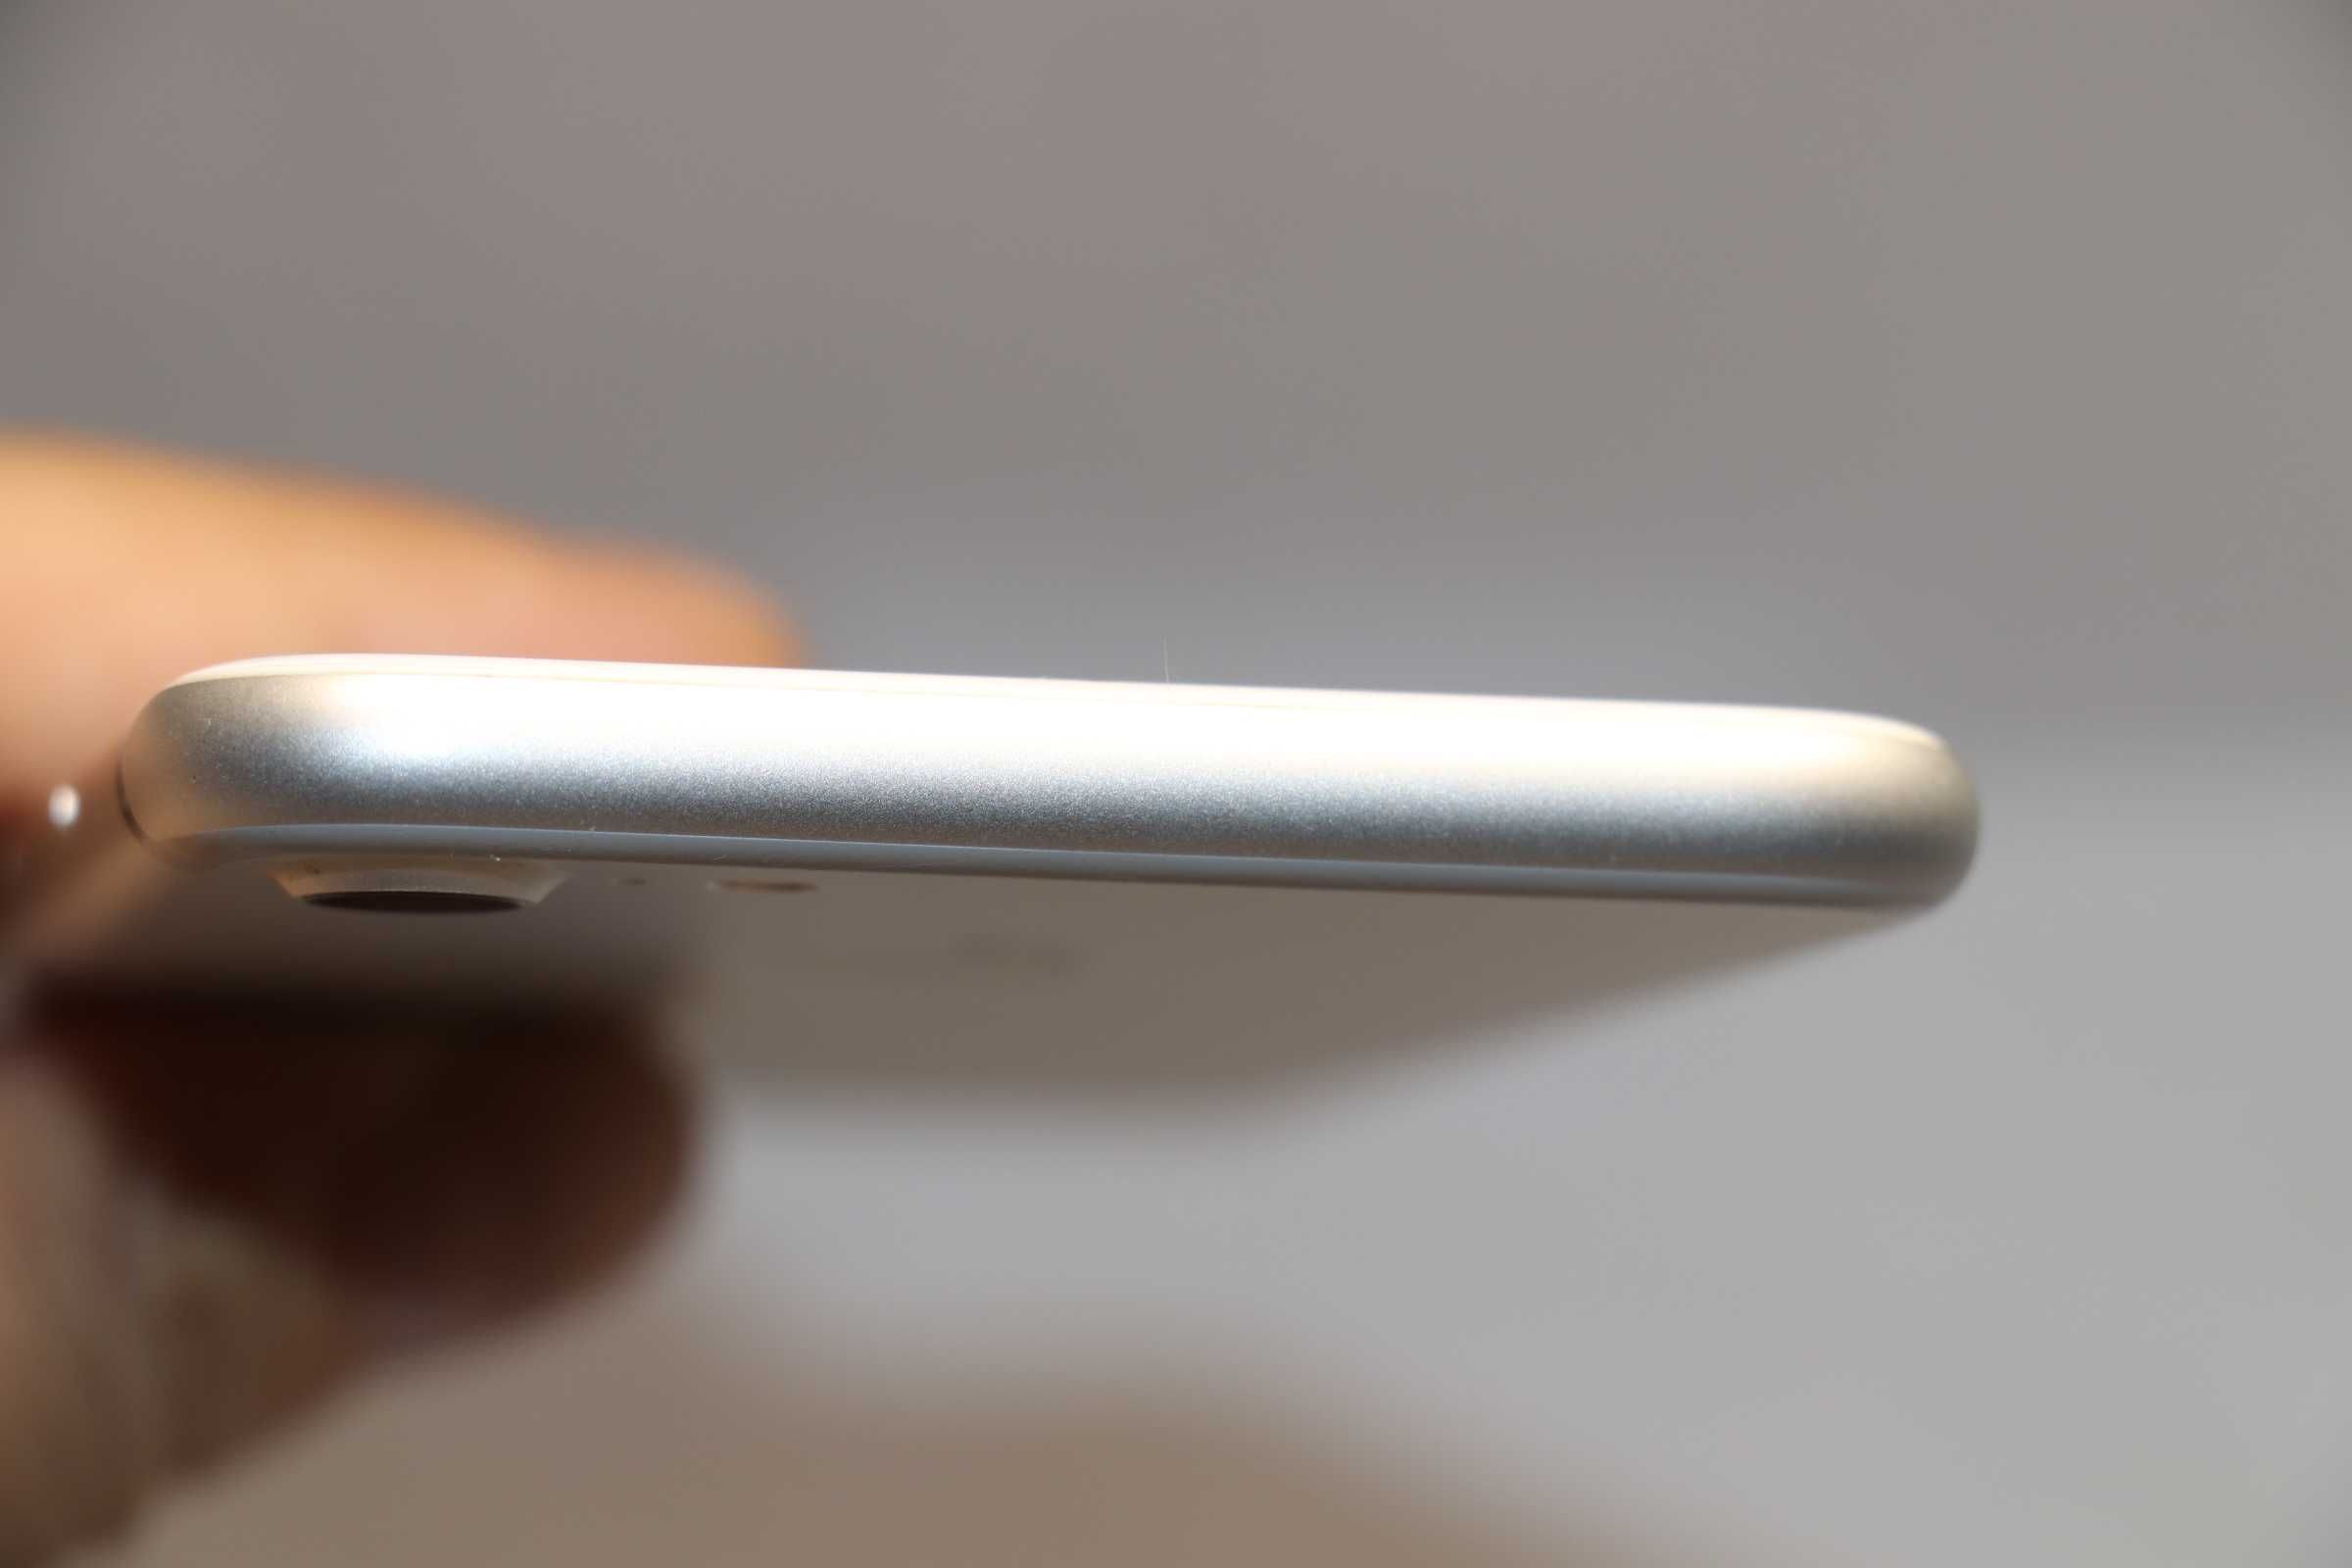 Apple iPhone 7 128GB Silver, идеальное состояние, АКБ 86%! neverlock